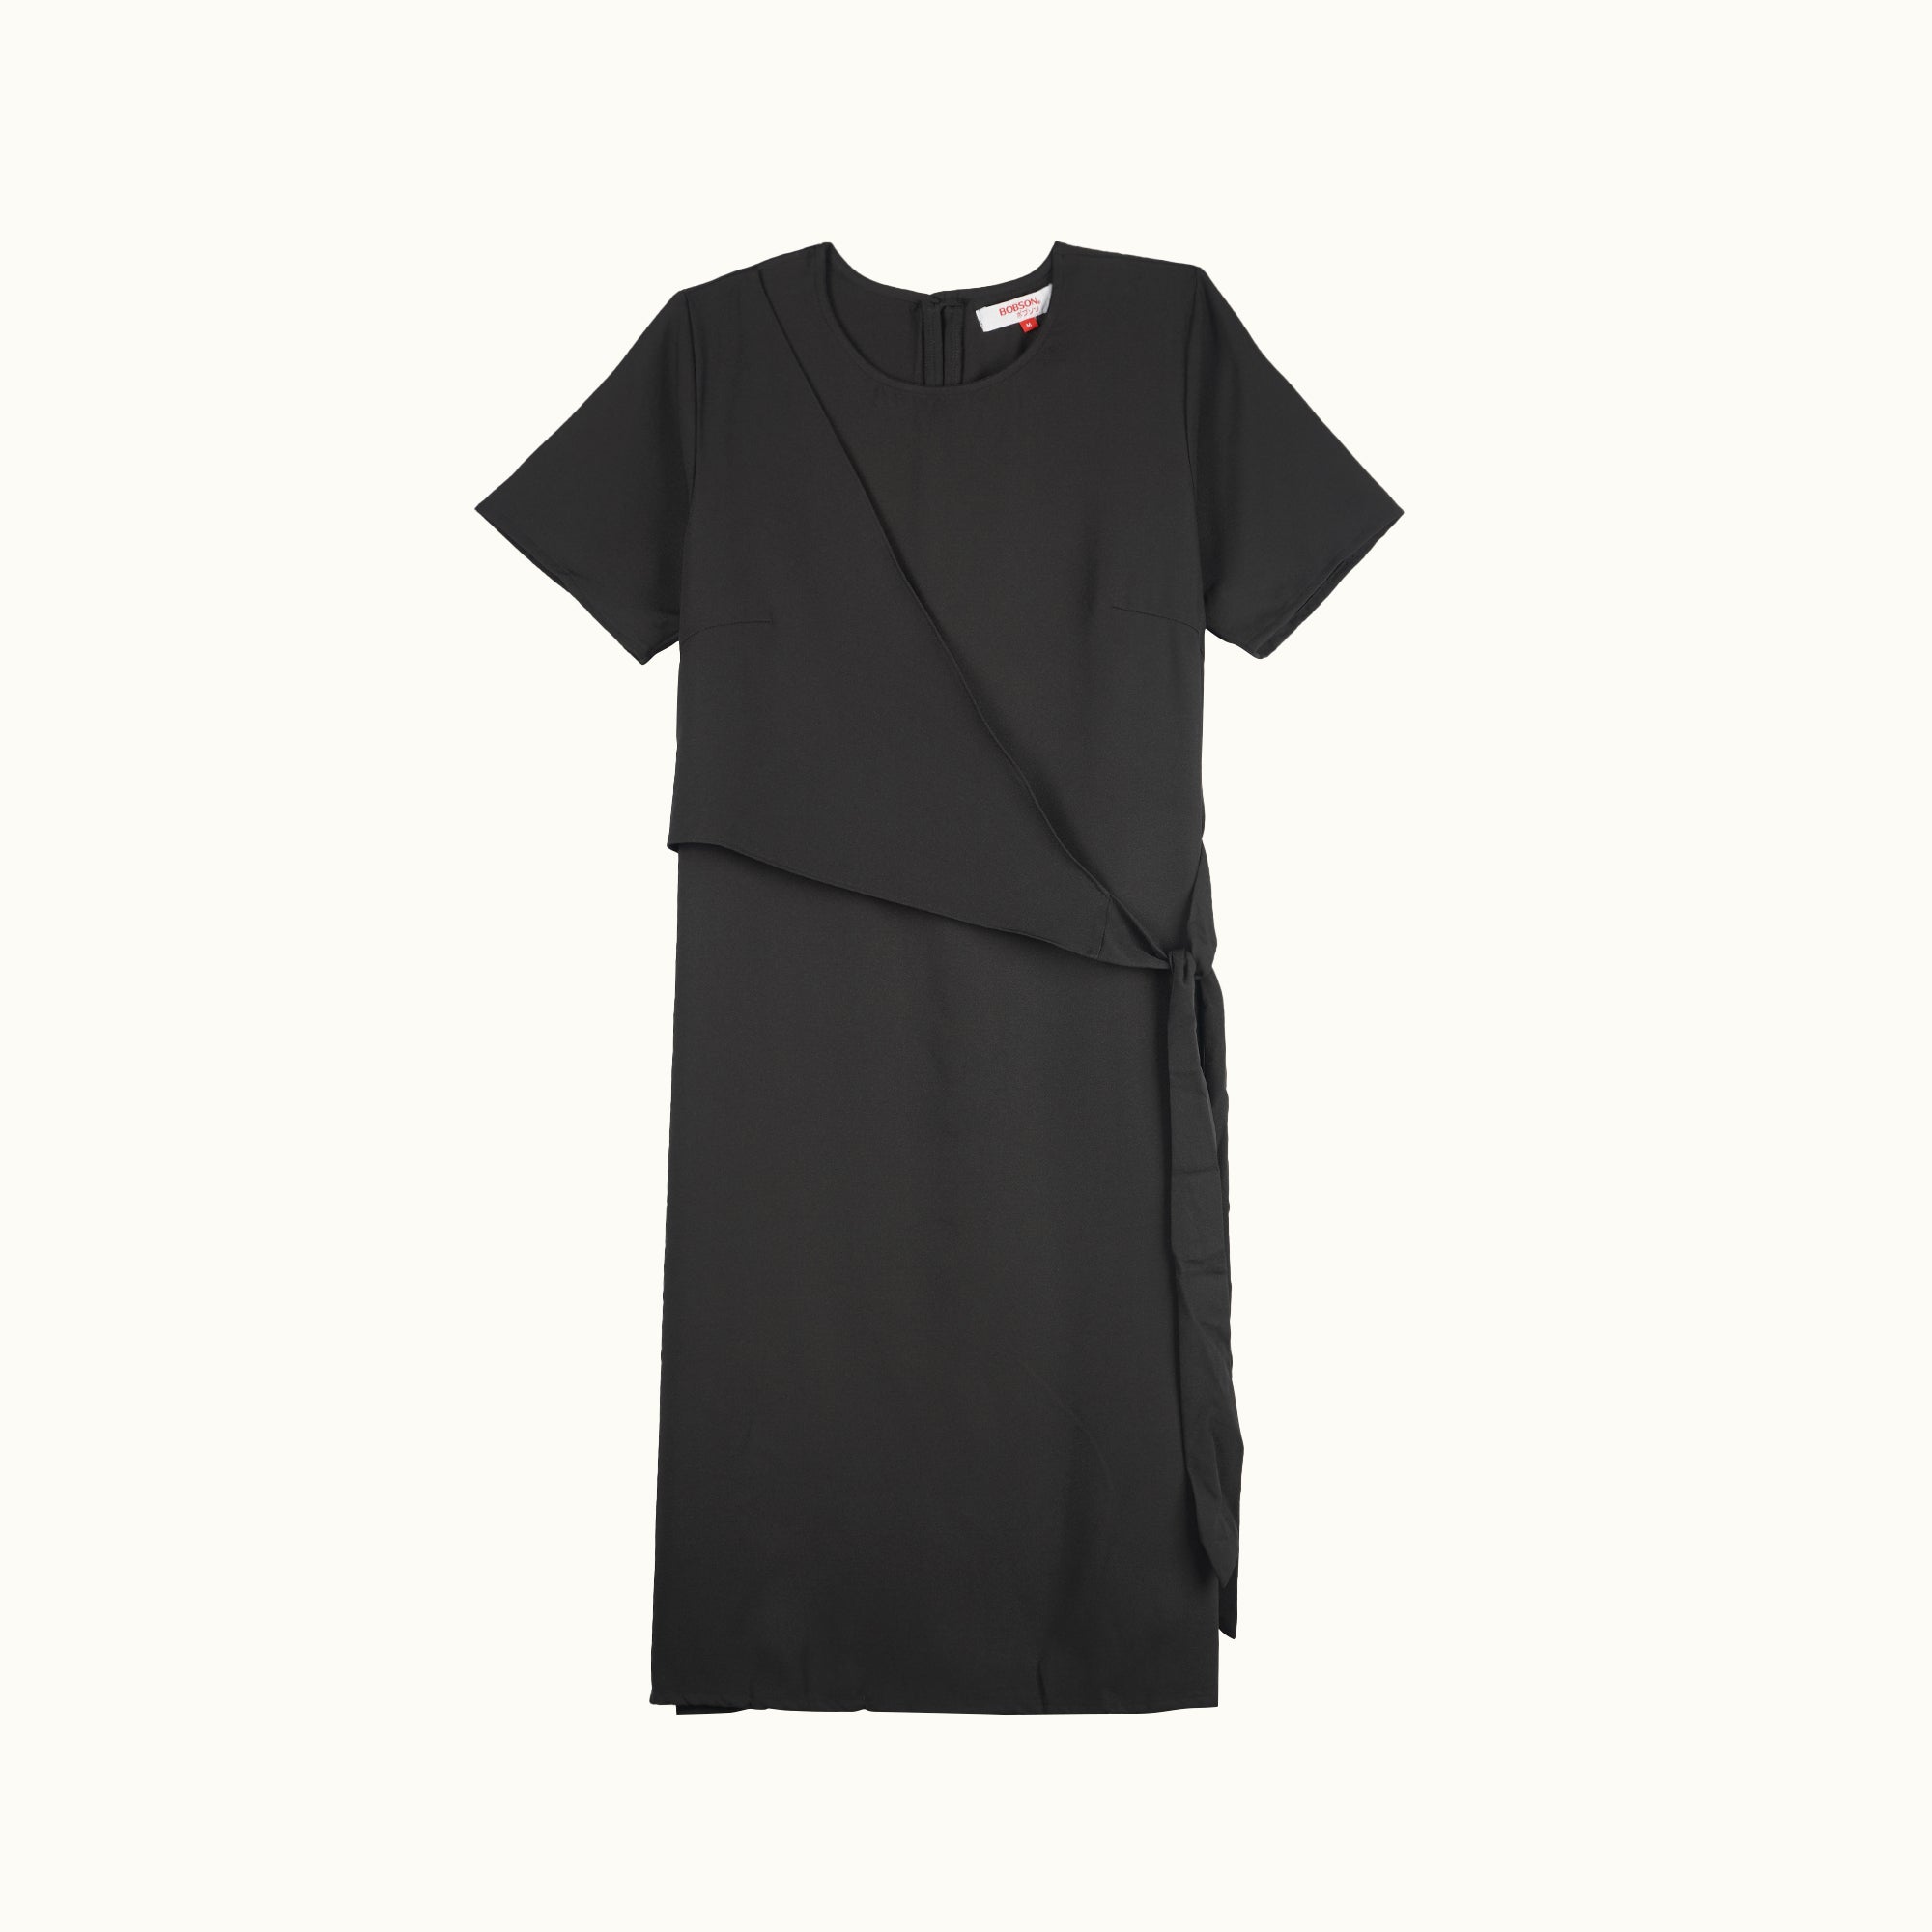 Bobson Japanese Ladies Basic Dress for Women Trendy Fashion High Quality Apparel Comfortable Casual Dress Regular Fit 142350 (Black)